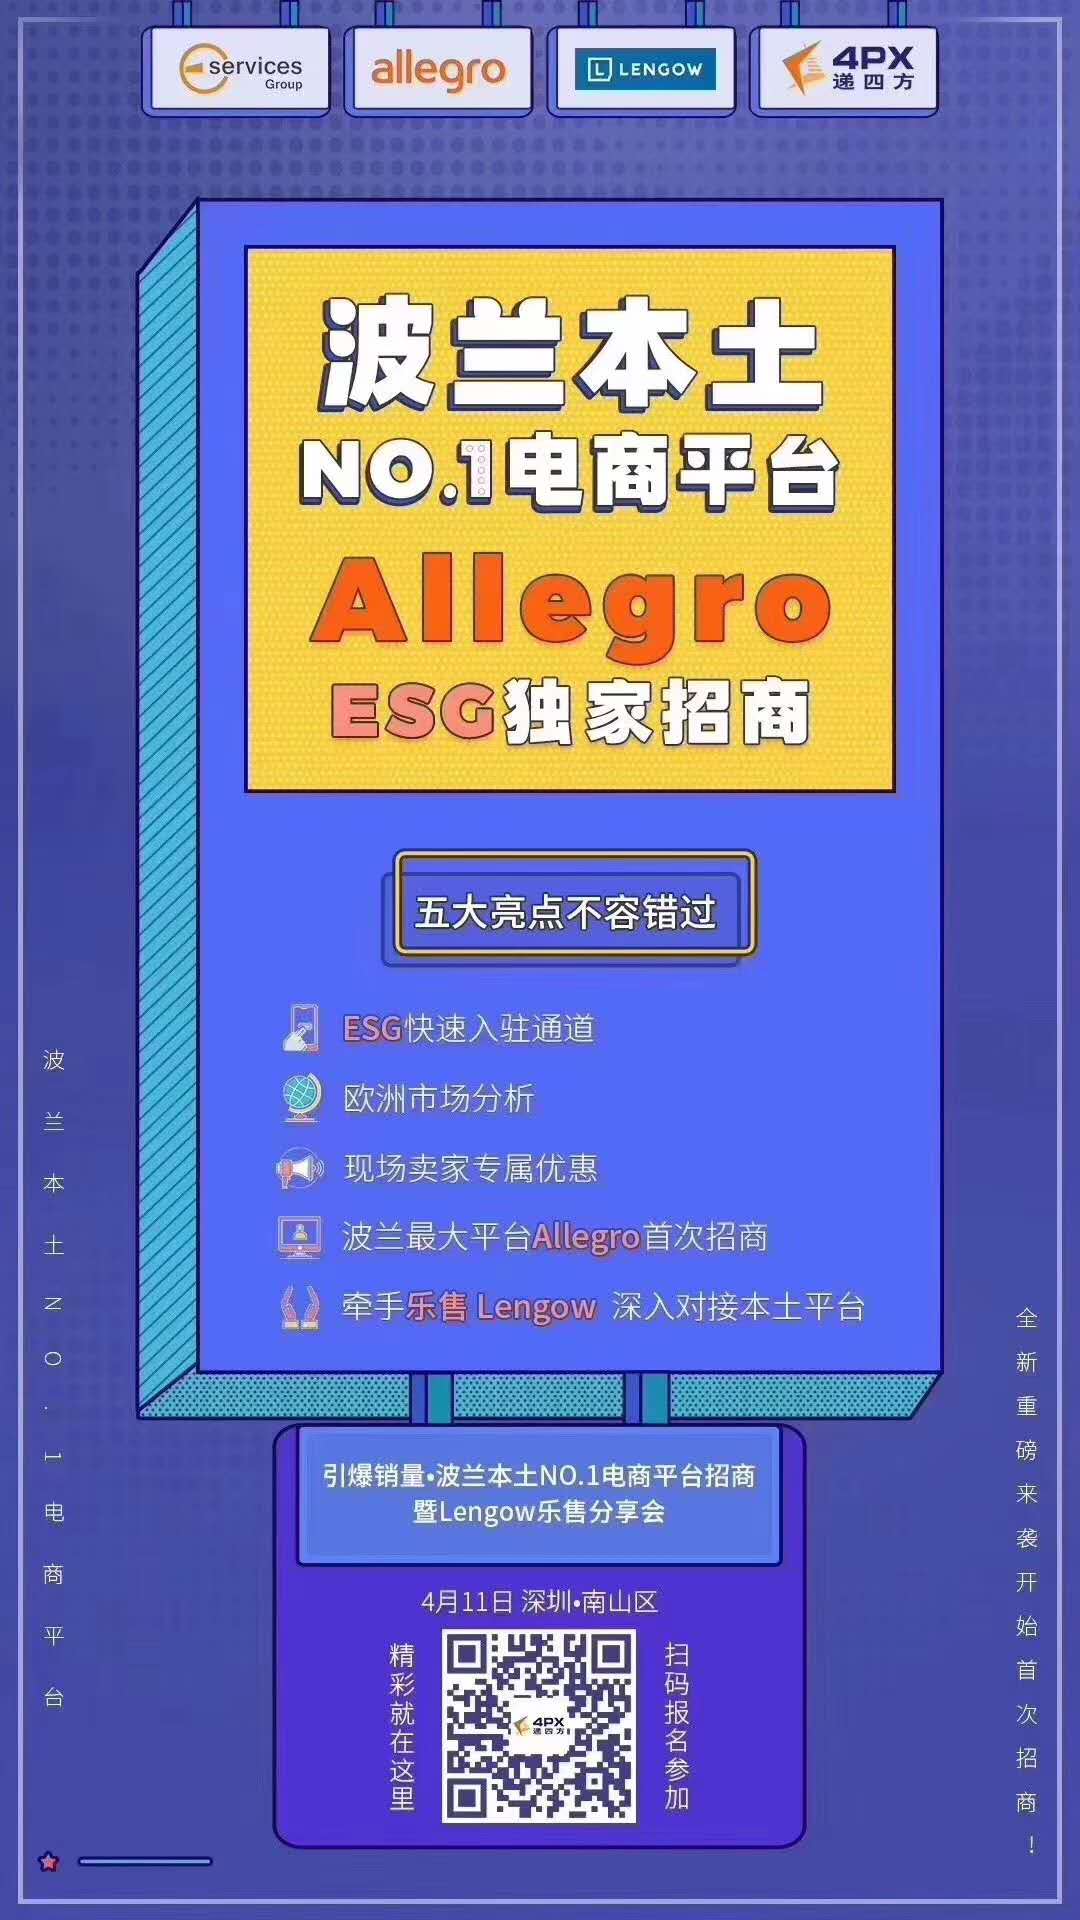 Konferencja Allegro w Chinach